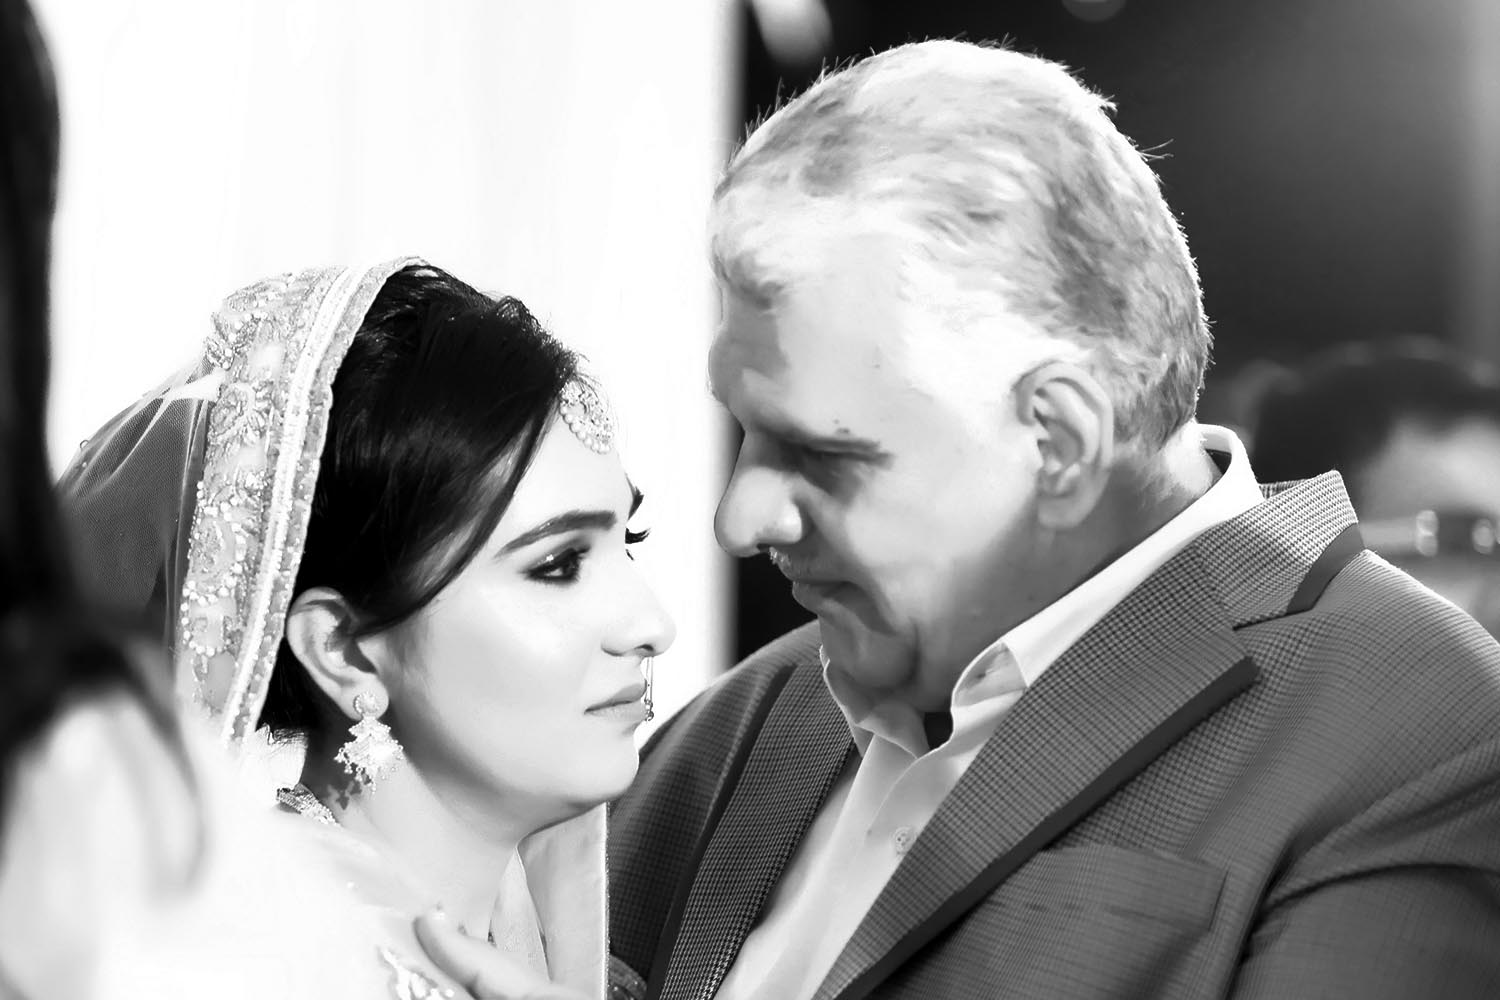 Muslim Wedding Photographers Mandya